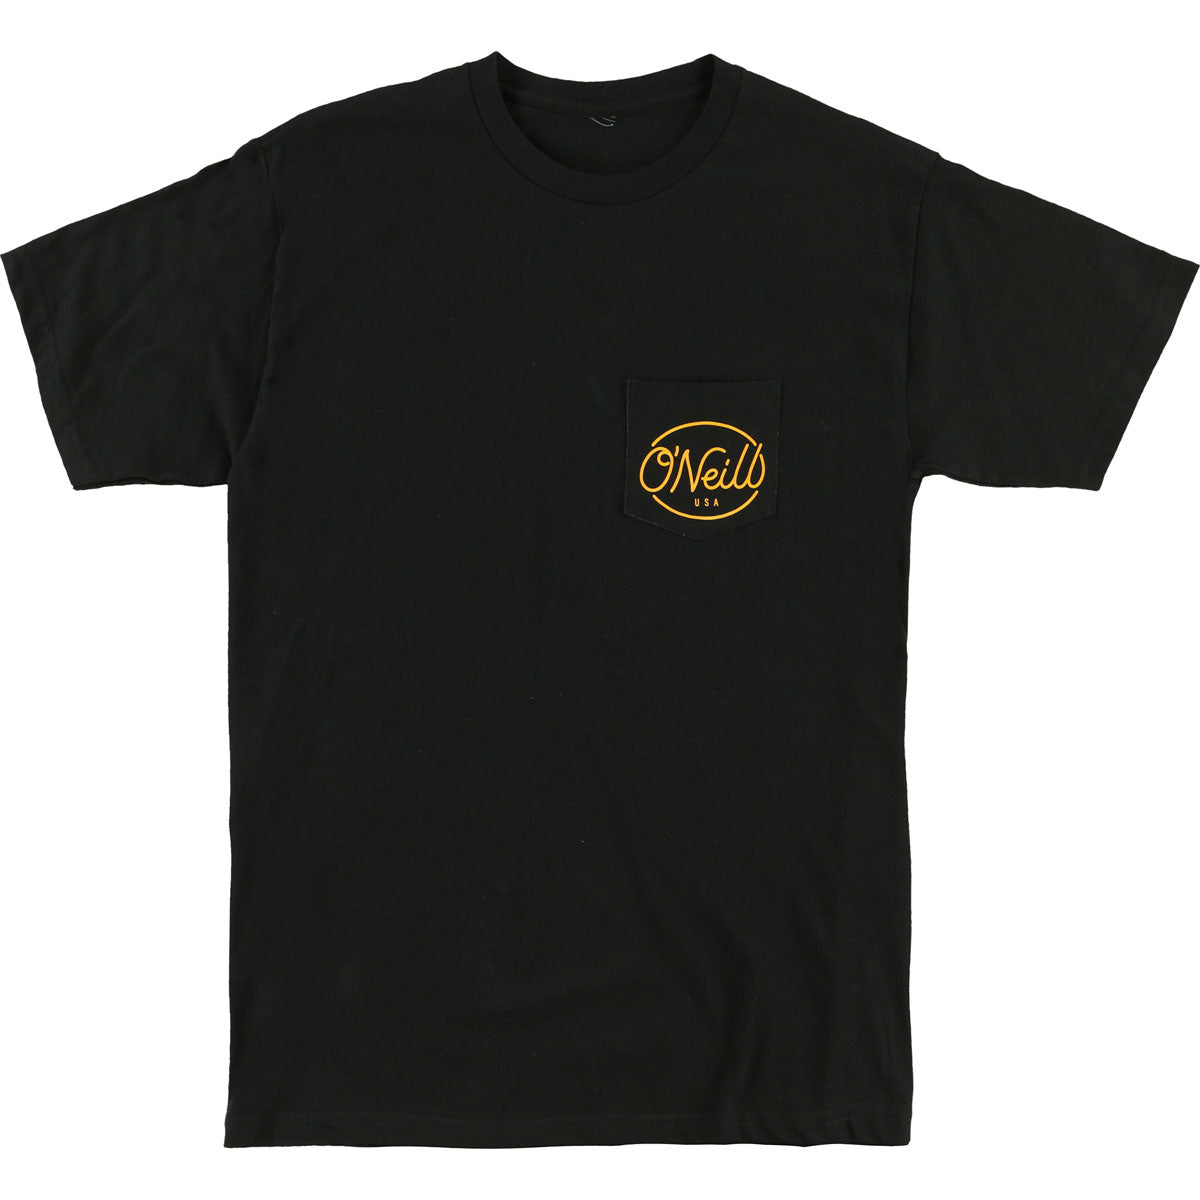 O'Neill Pops Men's Short-Sleeve Shirts - Black